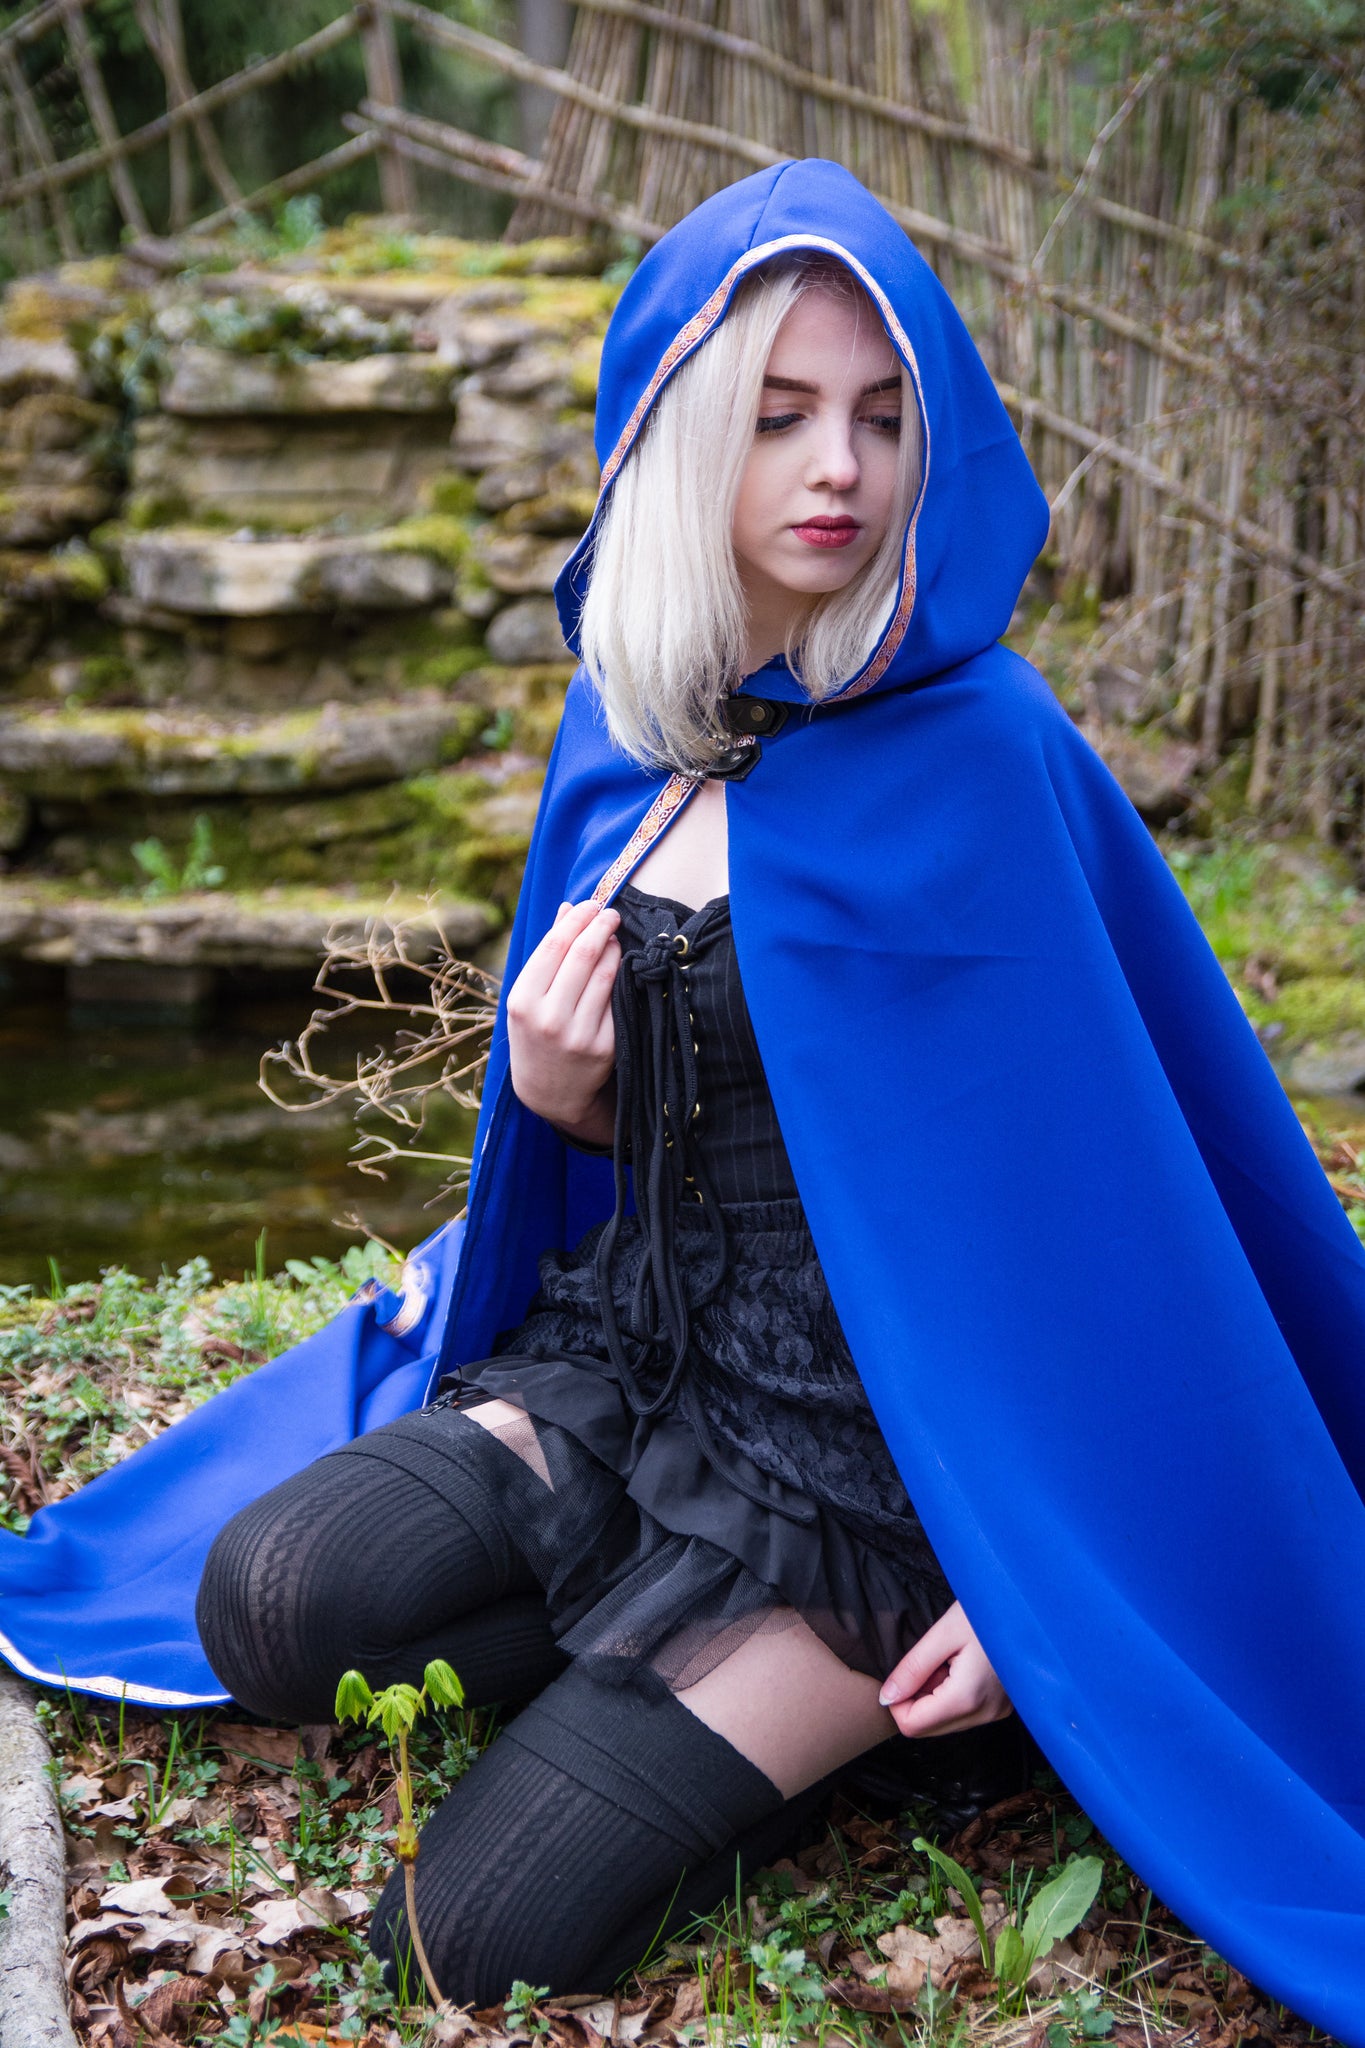 Elven Cape Fantasy Medieval Attire Wizard LARP Garb Cosplay Costume Renaissance Fair Wear Mystical Hooded Cloak